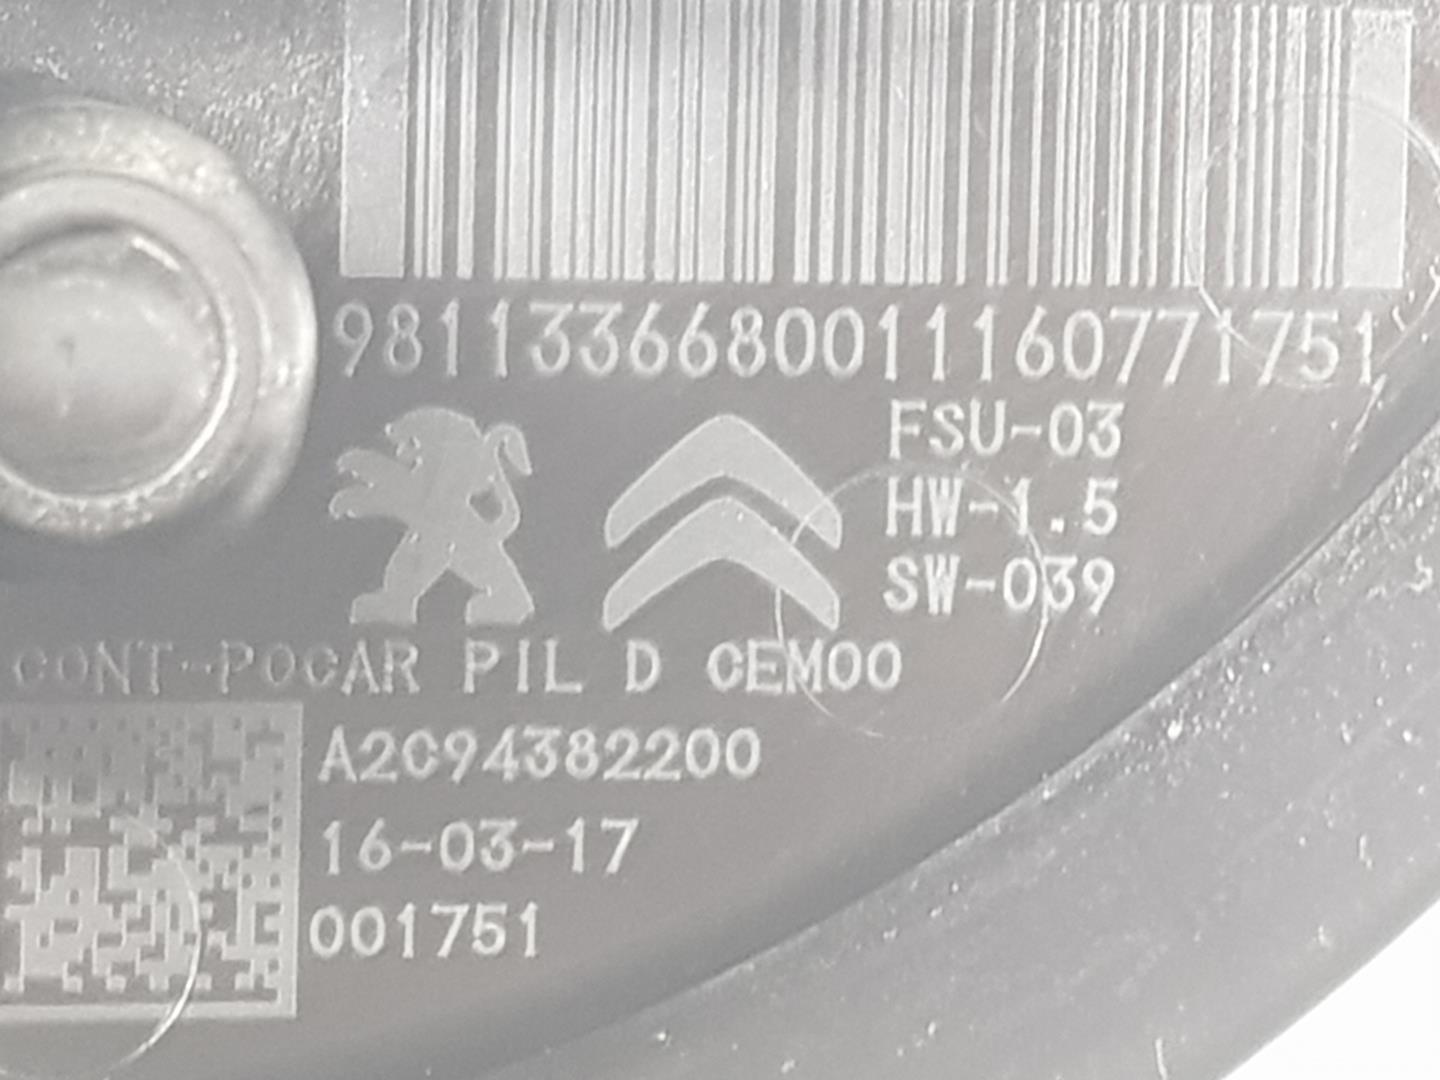 PEUGEOT 208 Peugeot 208 (2012-2015) In Tank Fuel Pump 9811336680, 9811336680 22564231